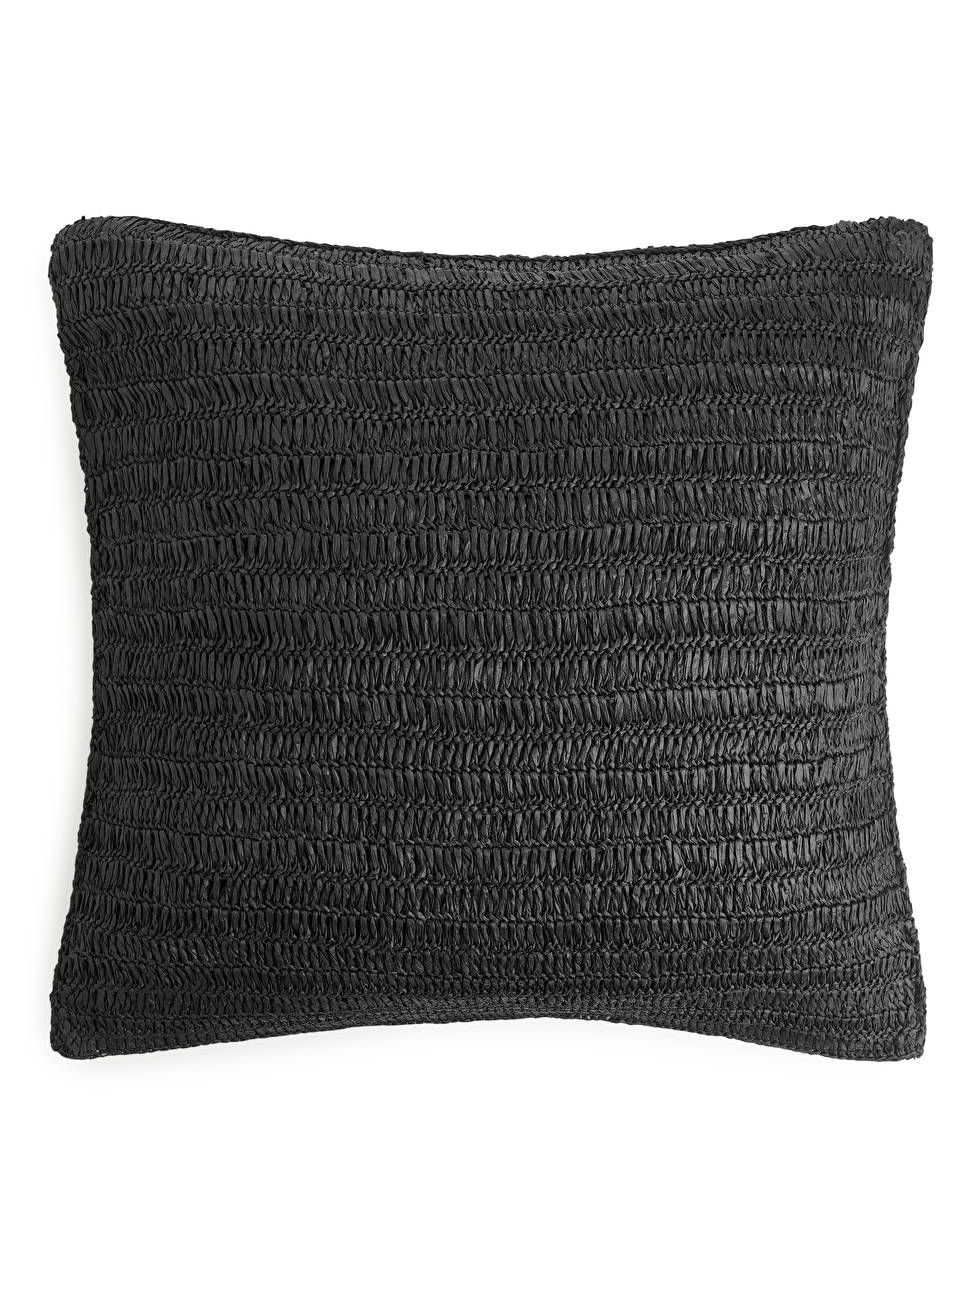 Raffia Straw Cushion Cover 50 x 50 - Black - ARKET GB | ARKET